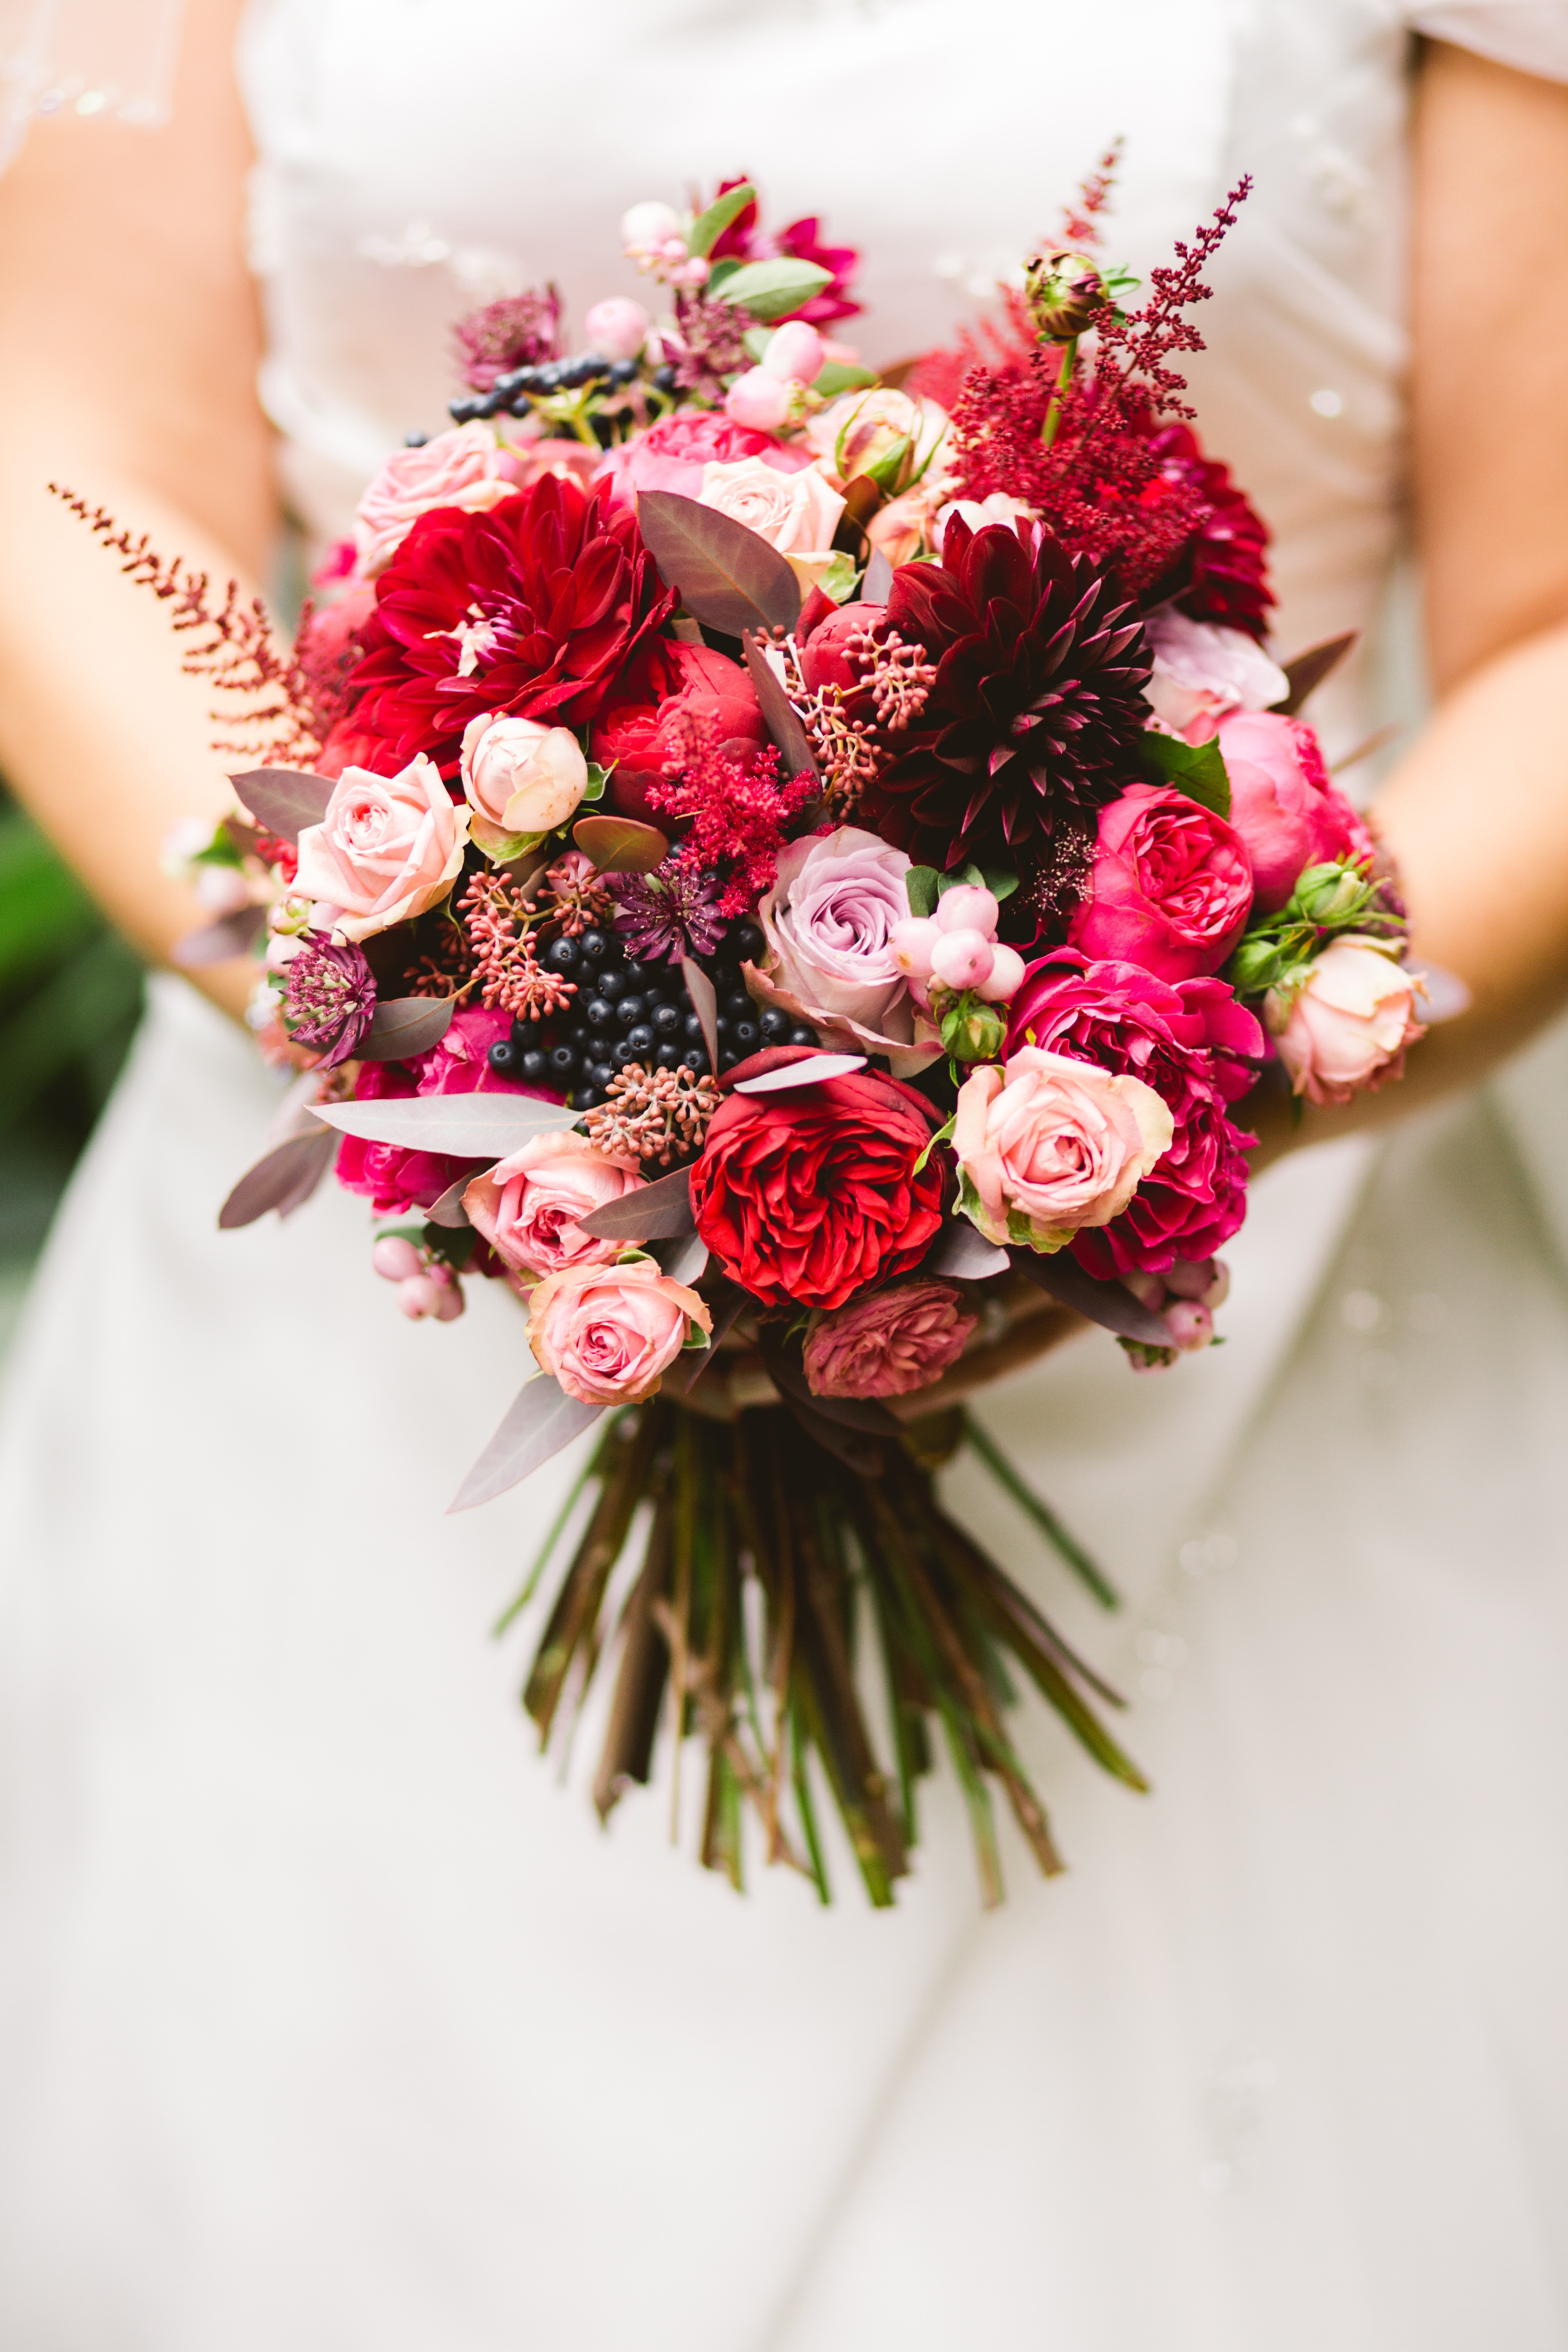 7 Ways To Choose The Best Wedding Flowers